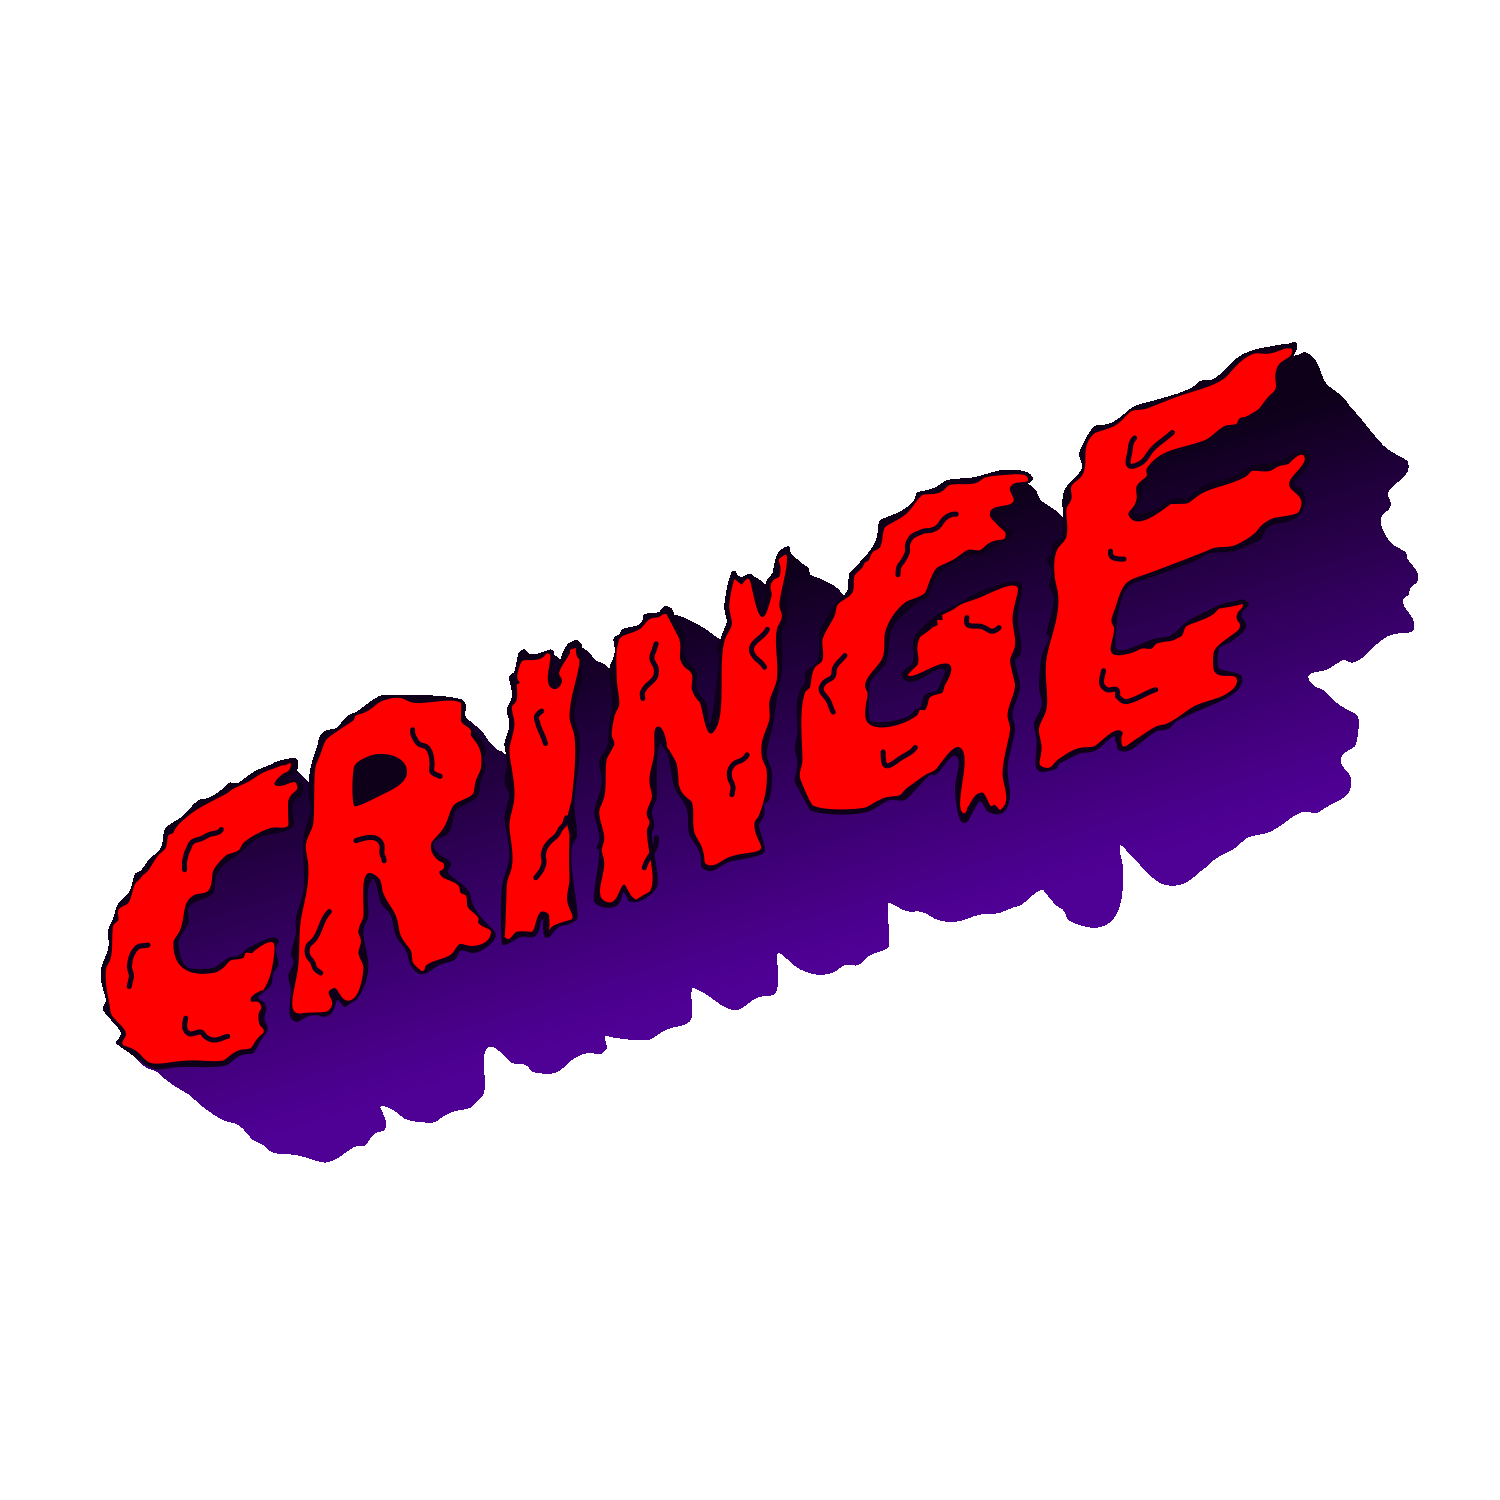 cringe-2